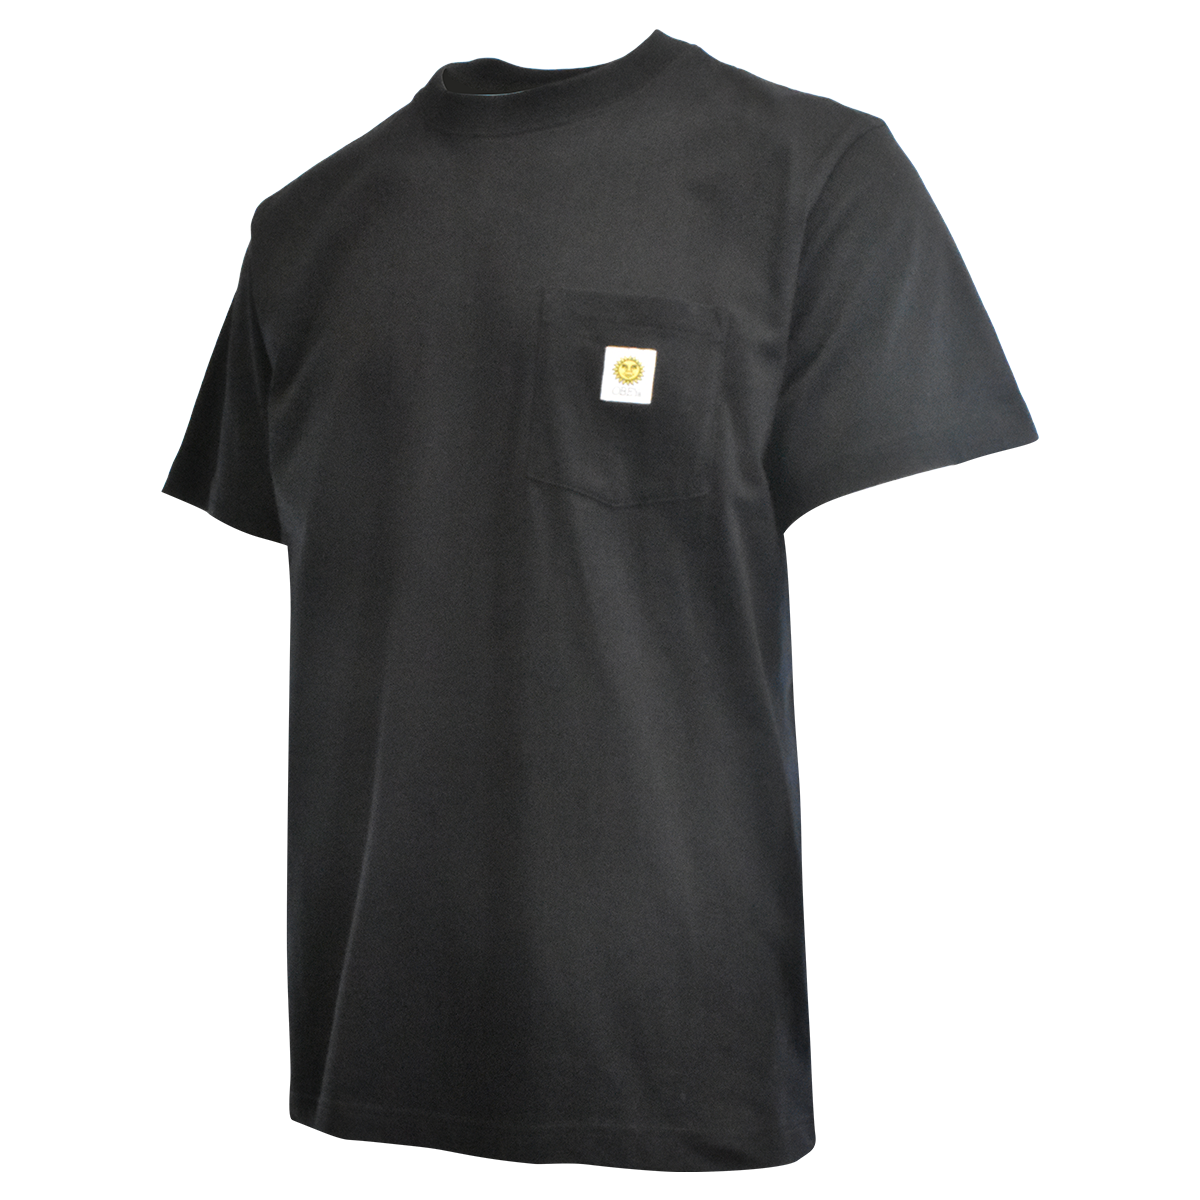 OBEY Men's T-Shirt Black Sunshine Patch Pocket Tee S/S (130)